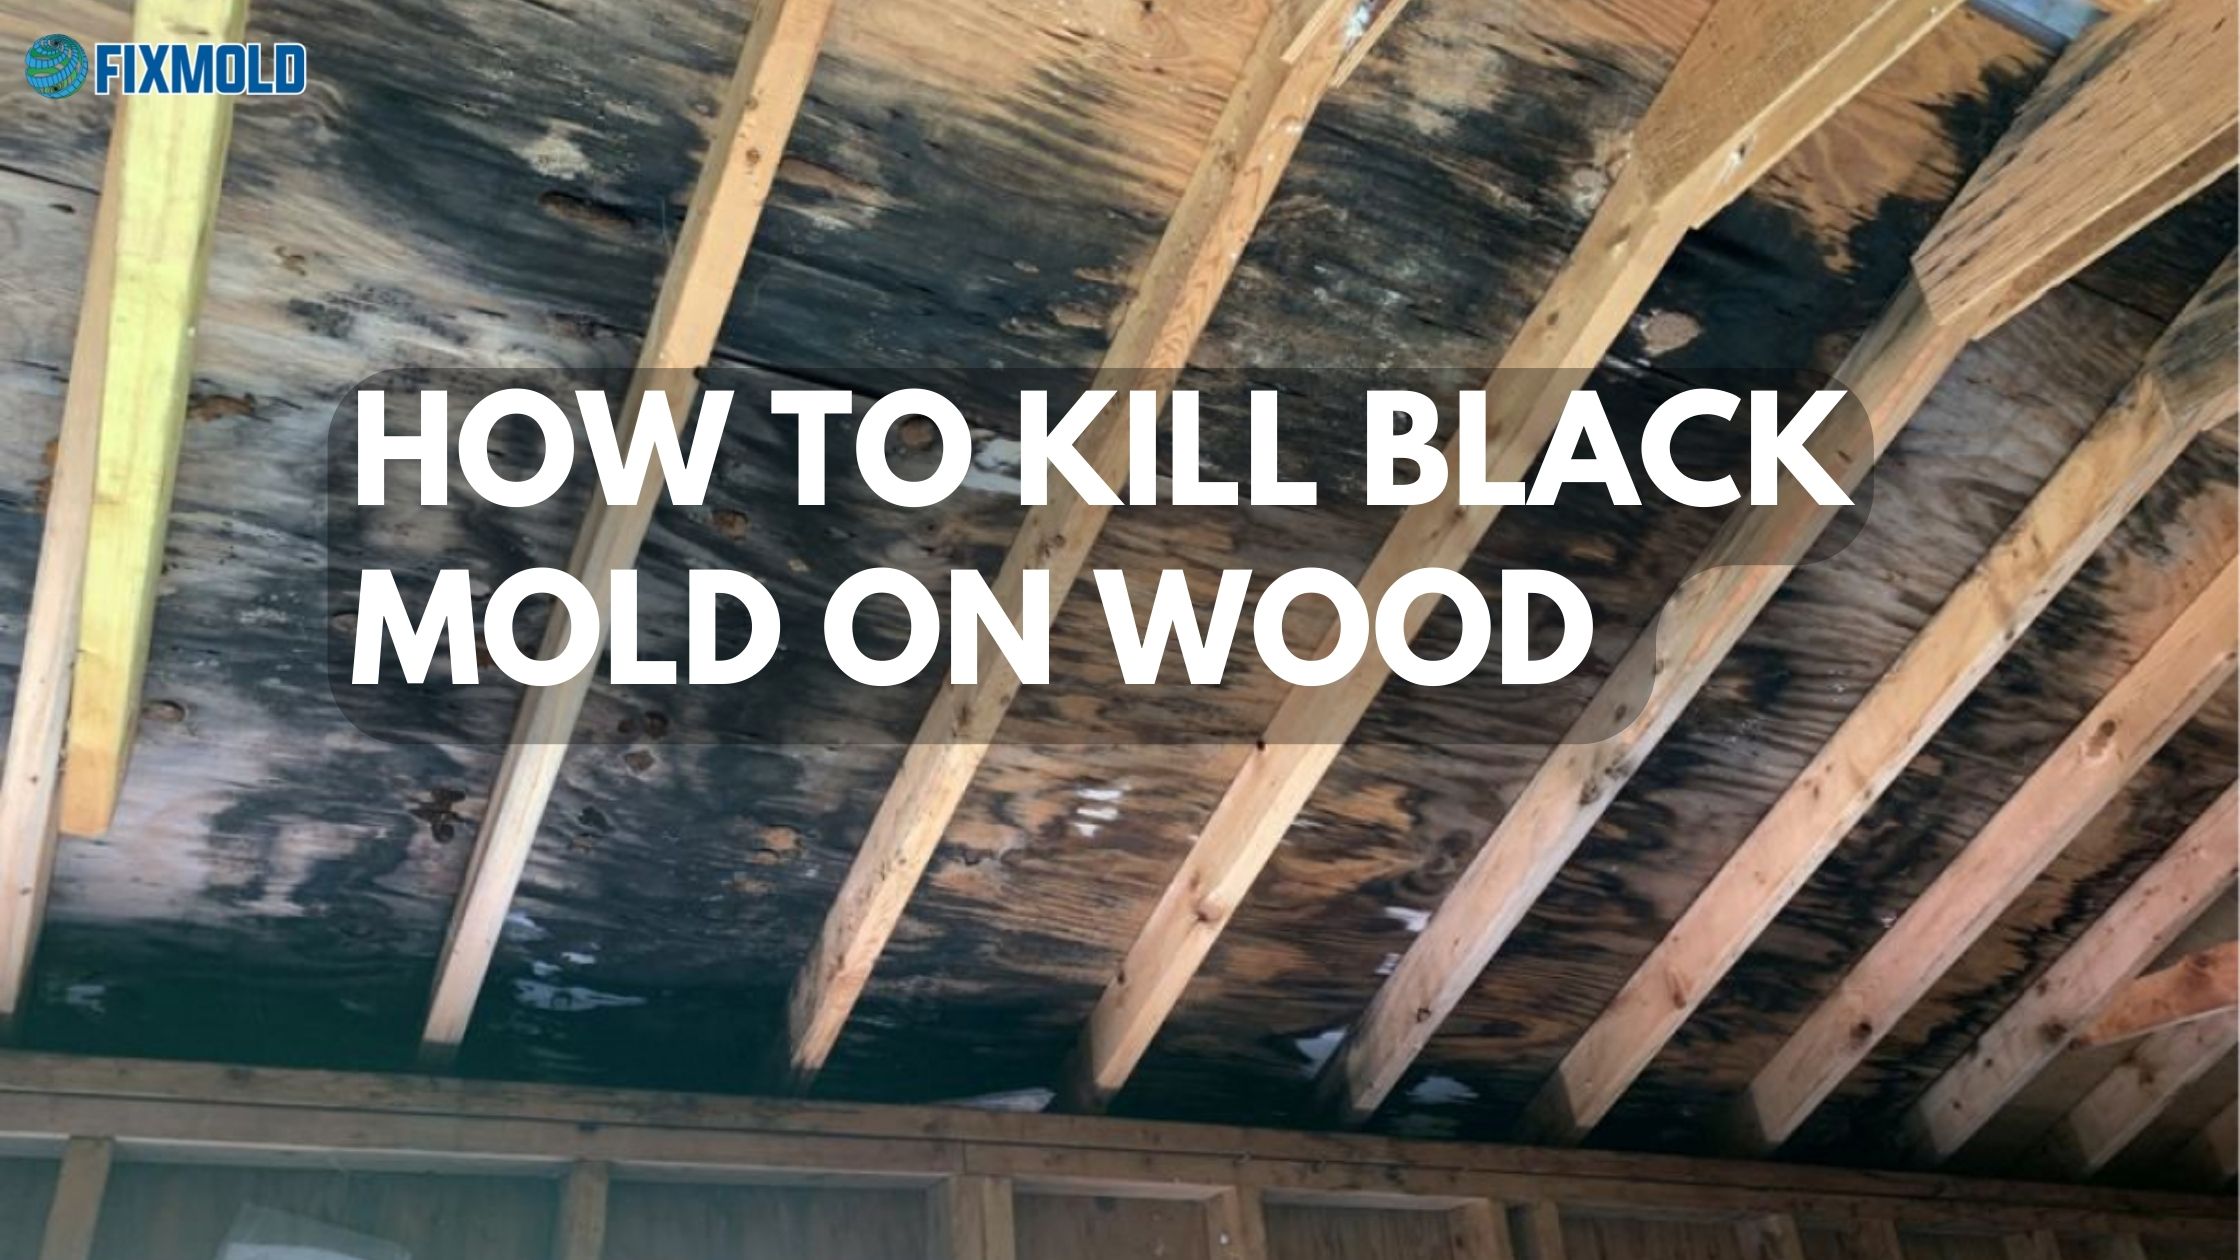 How to kill black mold on wood